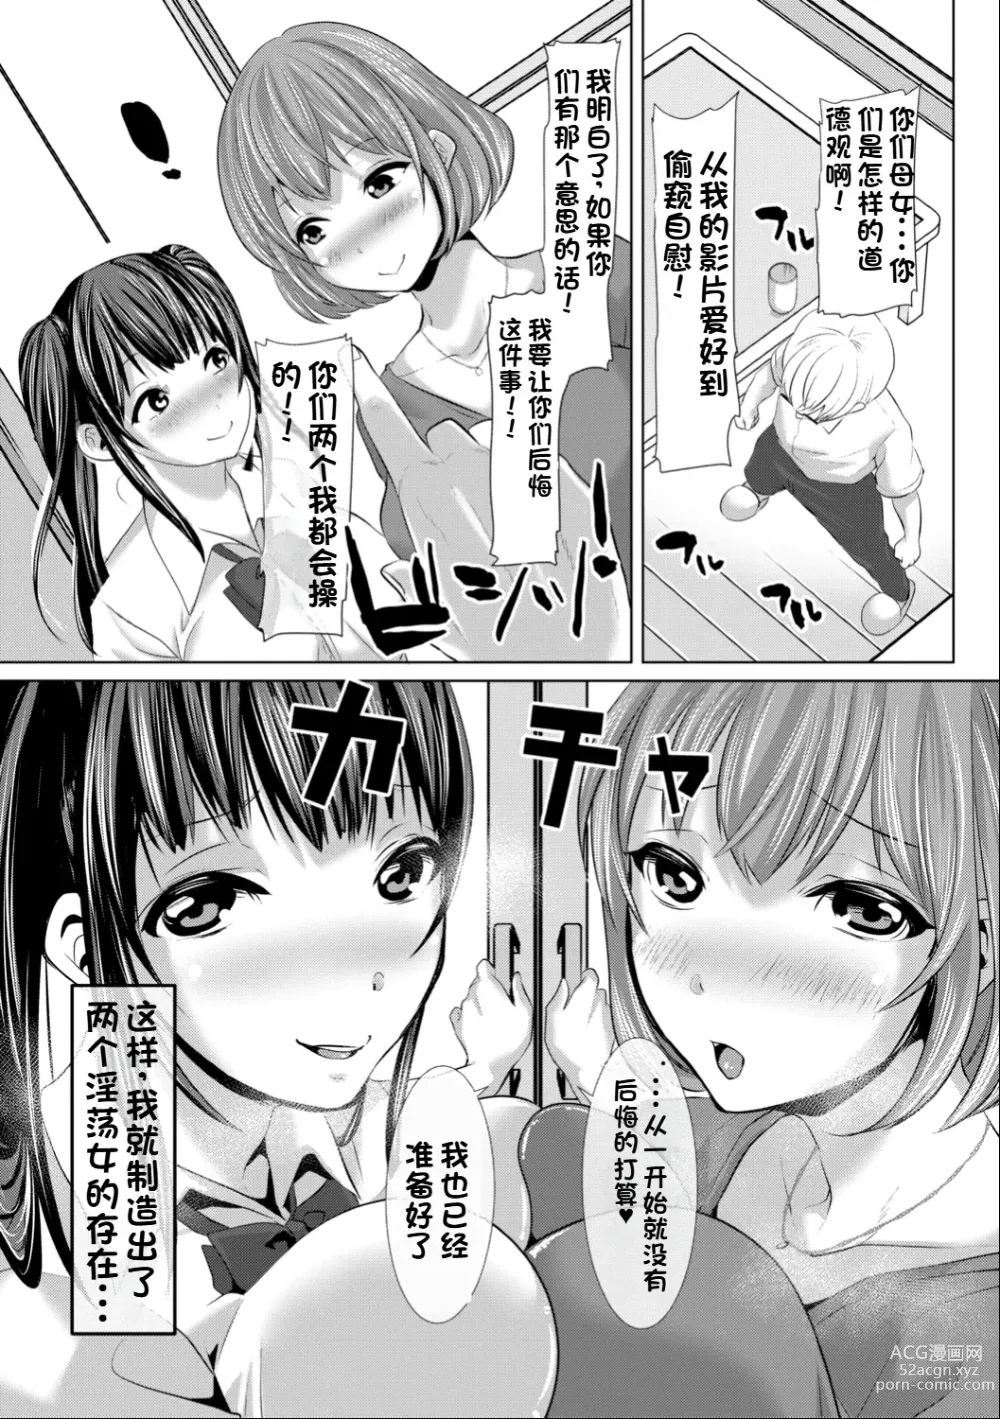 Page 10 of manga Suki Ara Ba Eroi Sitagi Wo Mi Setuke Te Kuru Seiso Bitti Oyako.